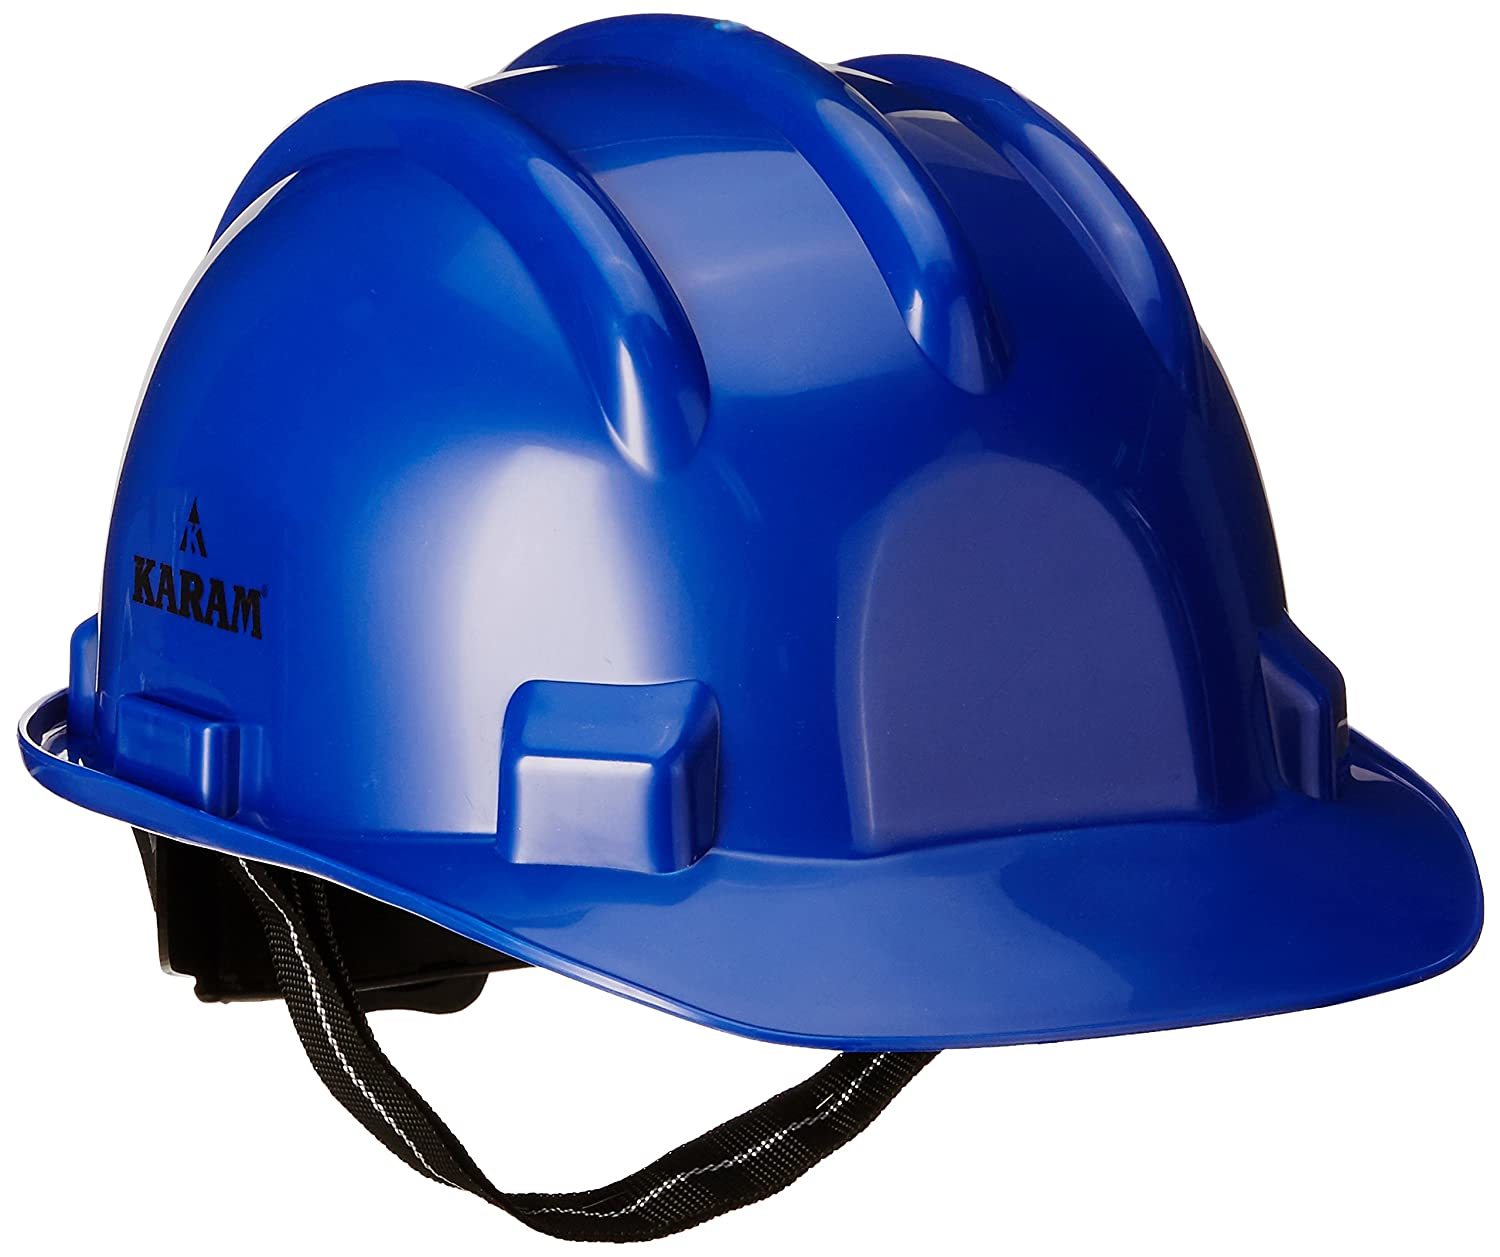 Karam Pn521 Safety Helmet